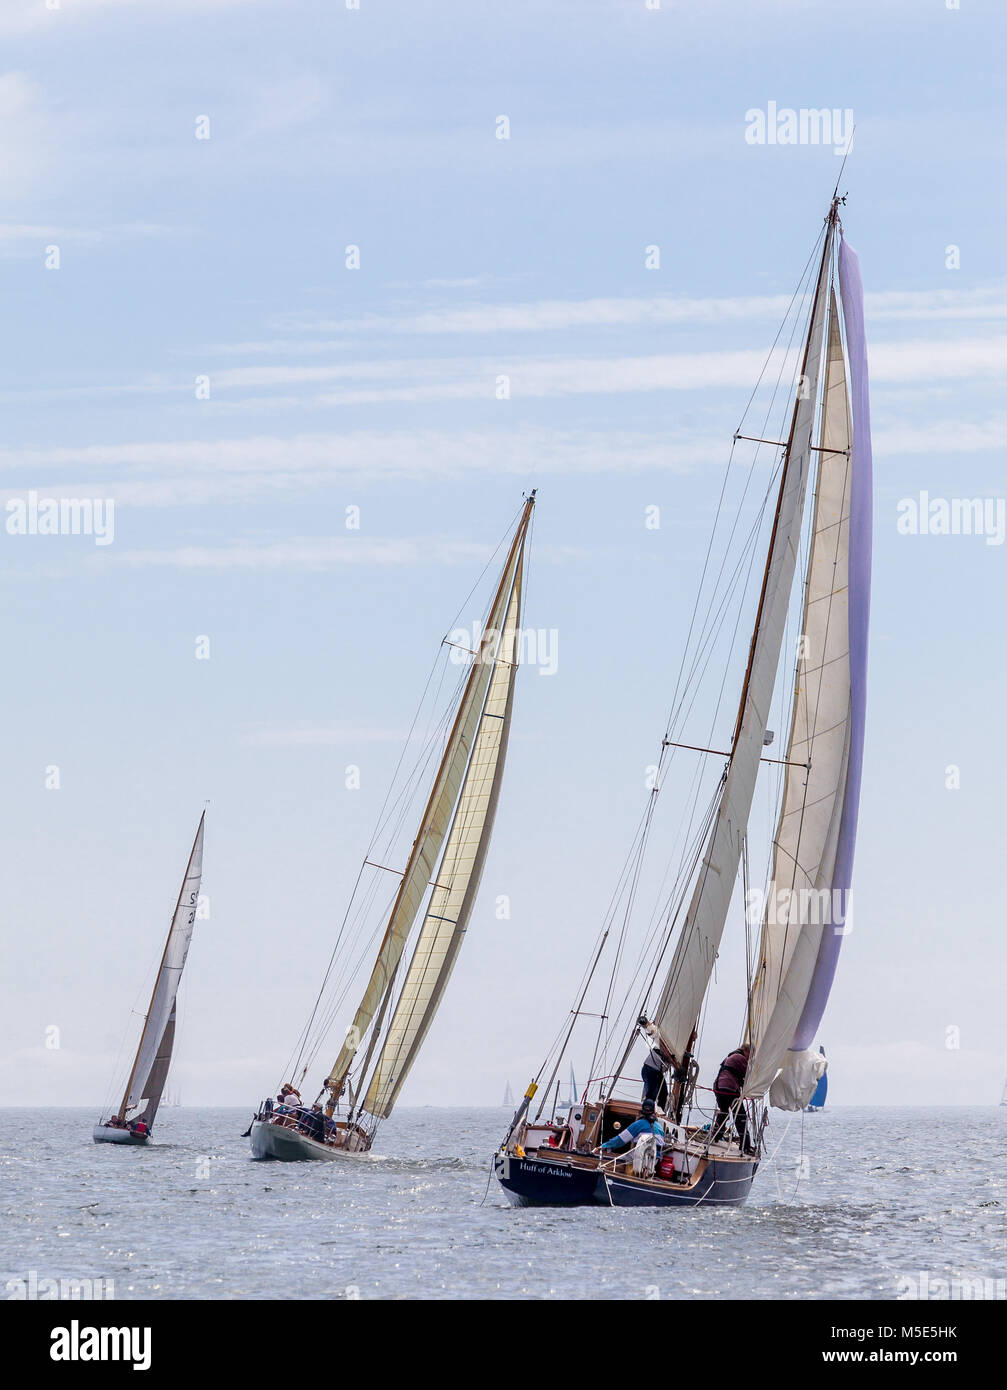 Drei klassische Holzboote segeln in den Abstand unter vollen Segeln. Stockfoto